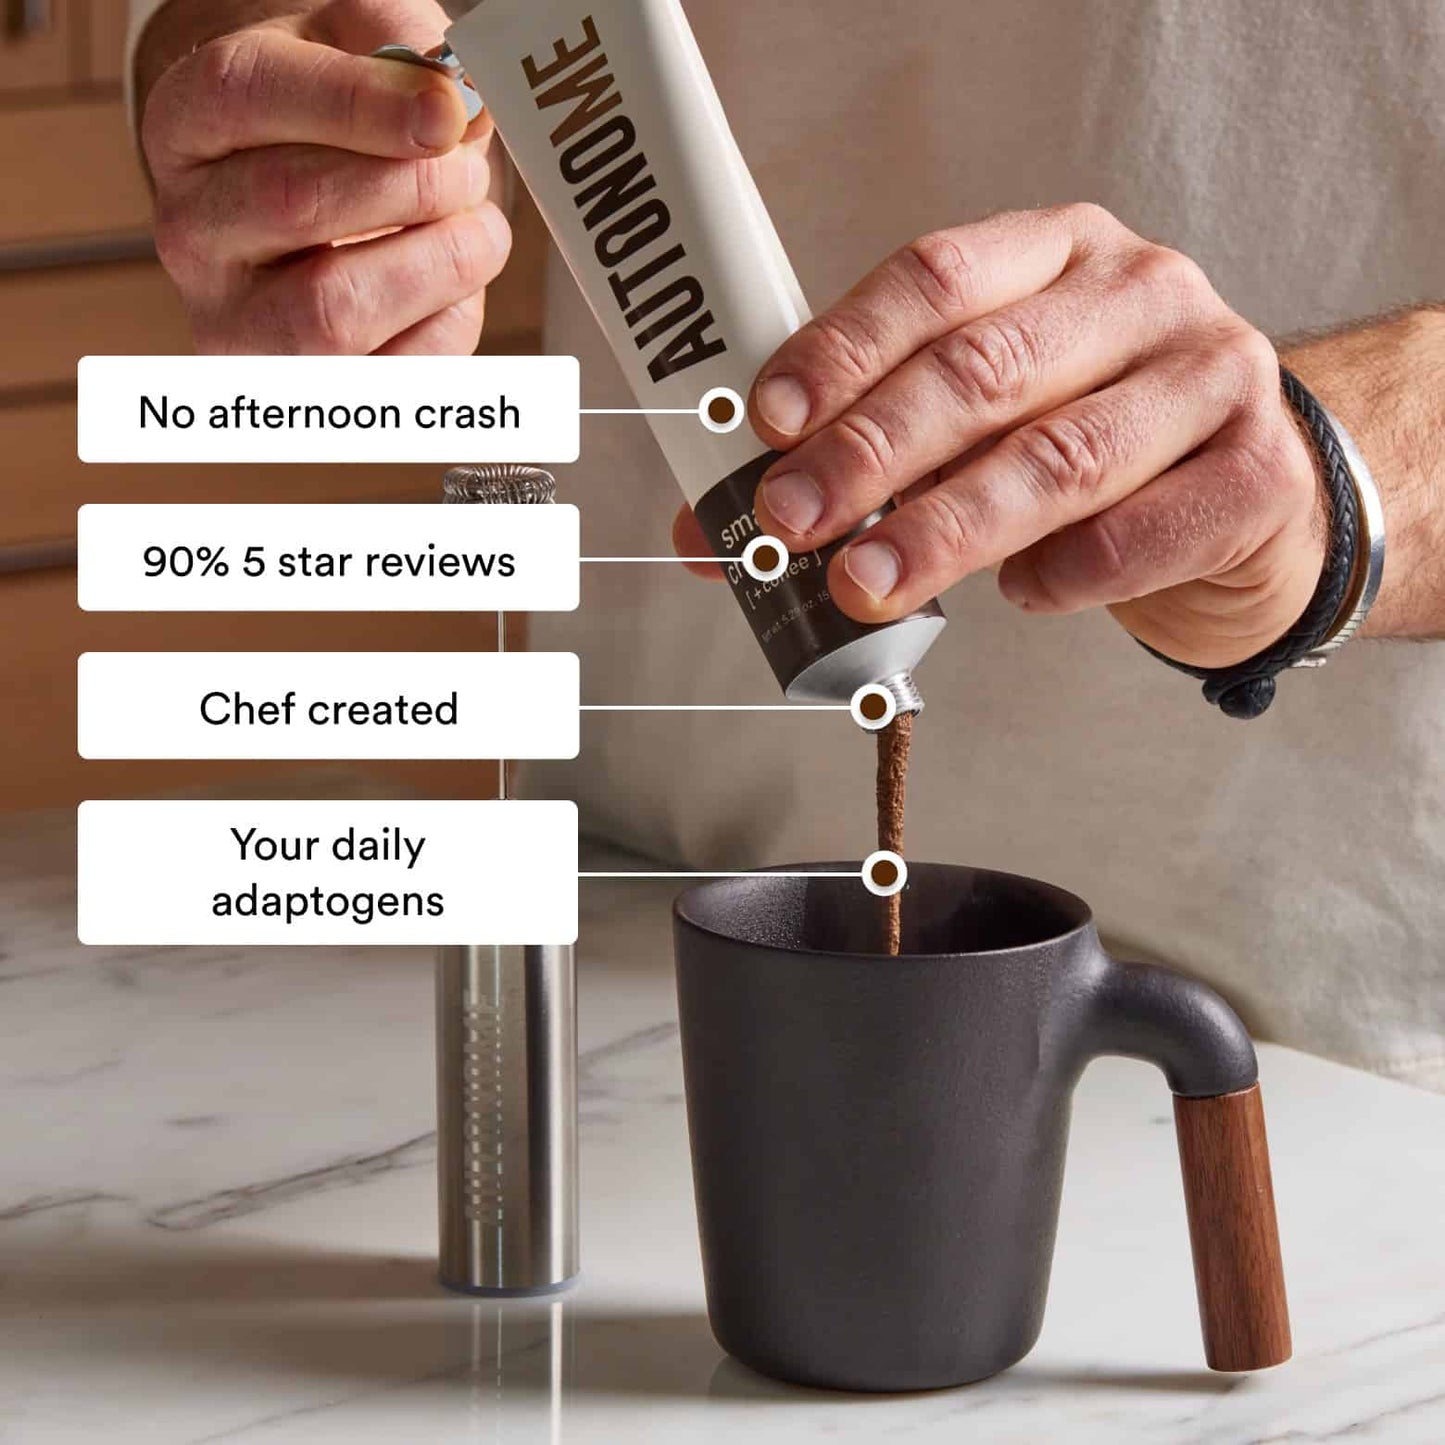 10 Servings of AUTONOMY Smart Latte